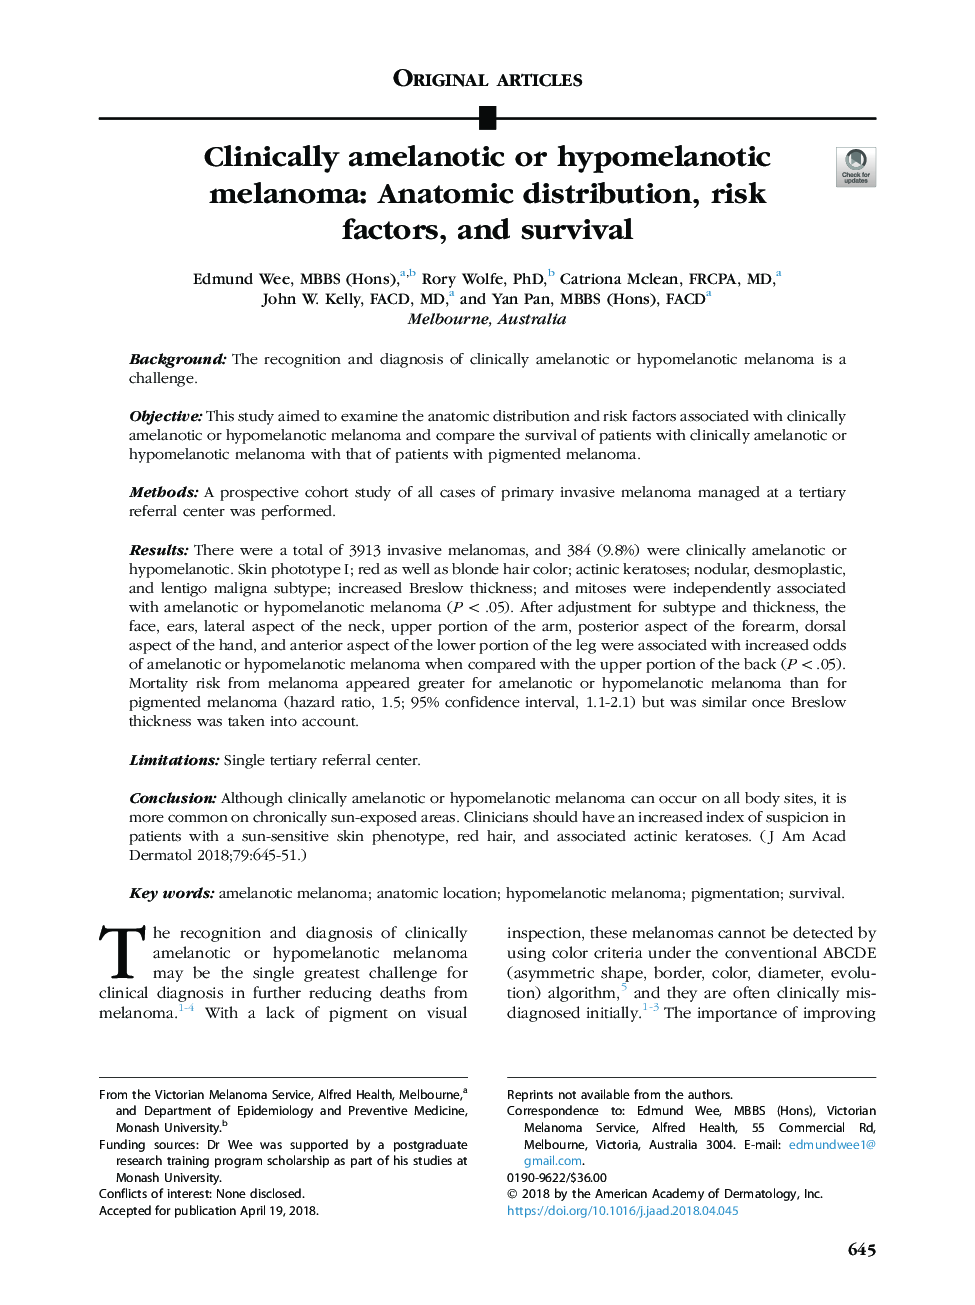 ملانوم کلینیک آملانوئات یا هیپوملانوکتیک: توزیع آناتومیک، عوامل خطر و بقاء